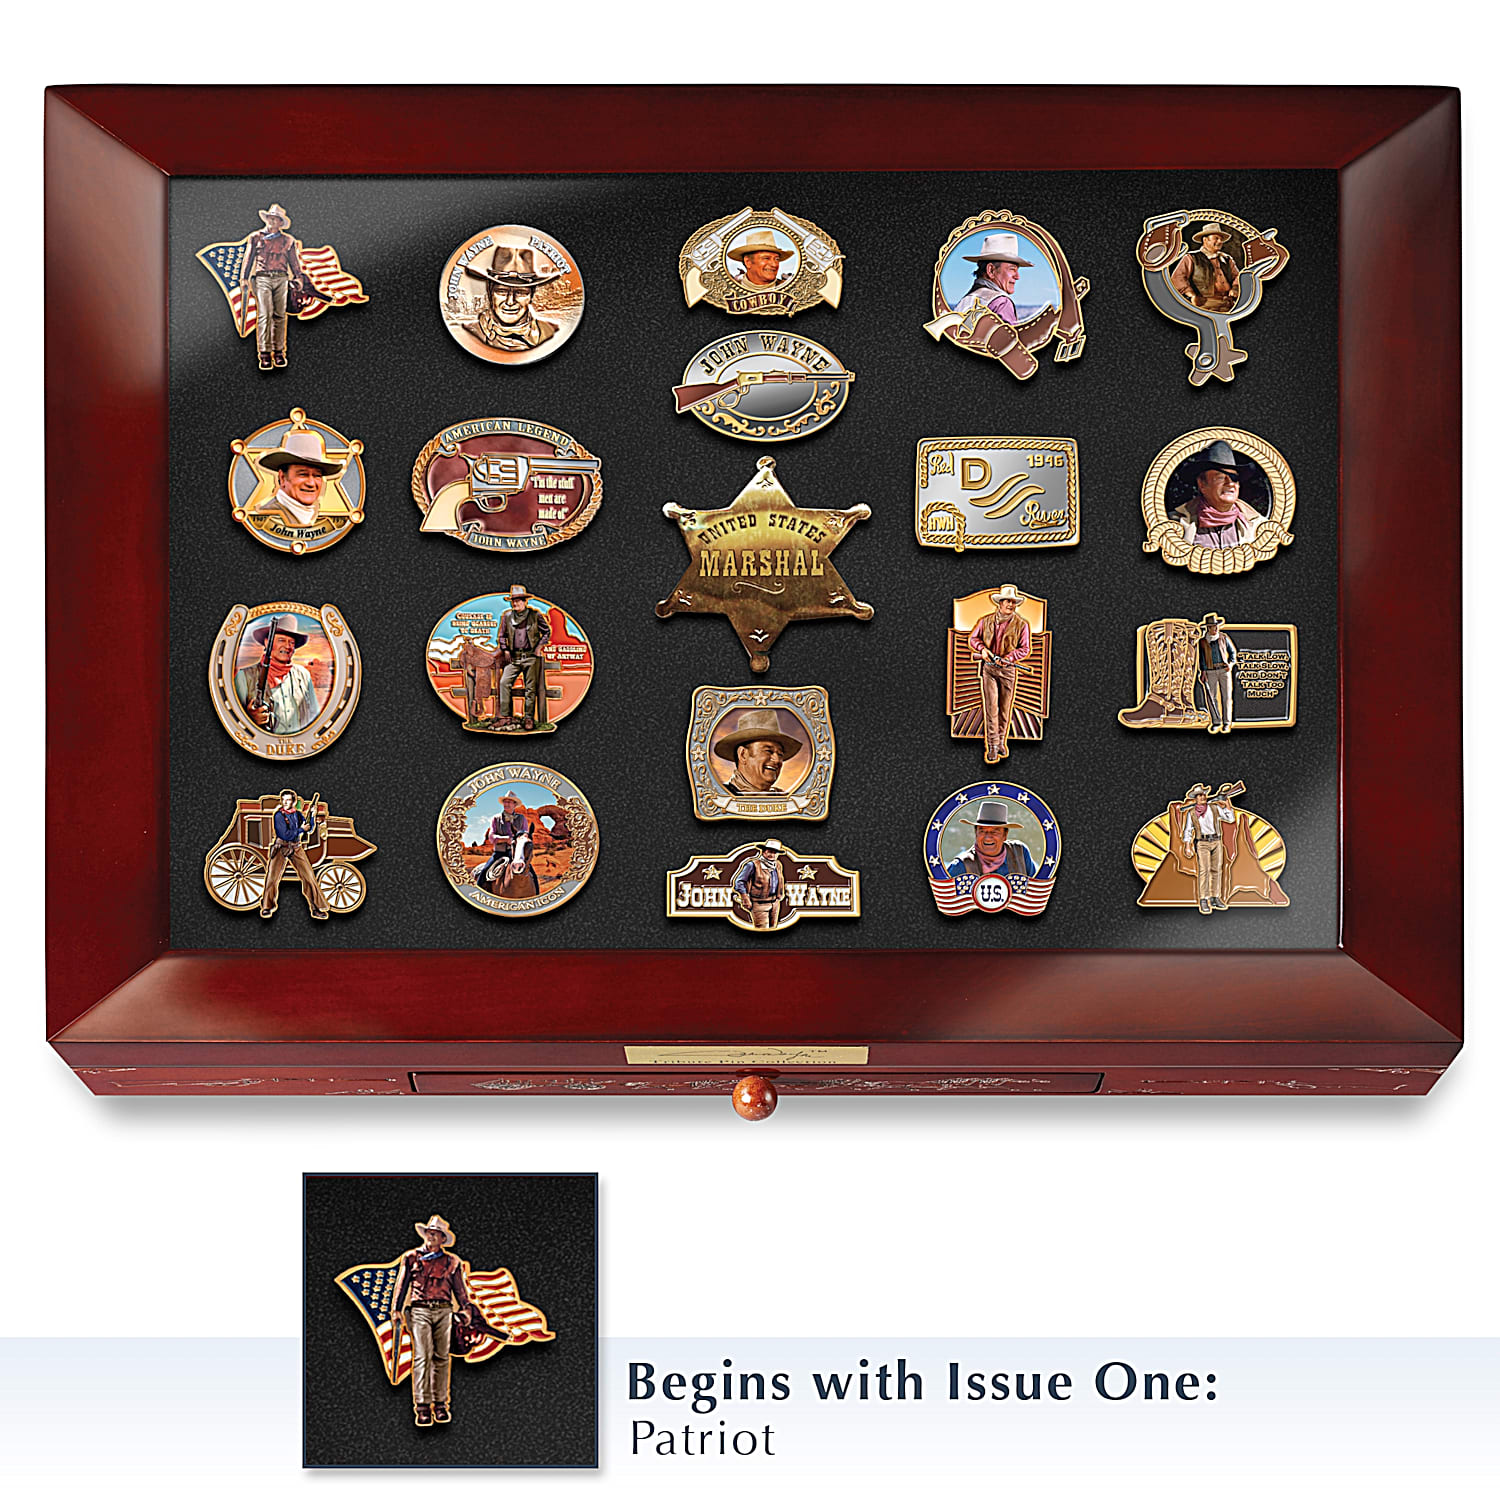 John Wayne Tribute Pin Collection Featuring American Legend, The Duke